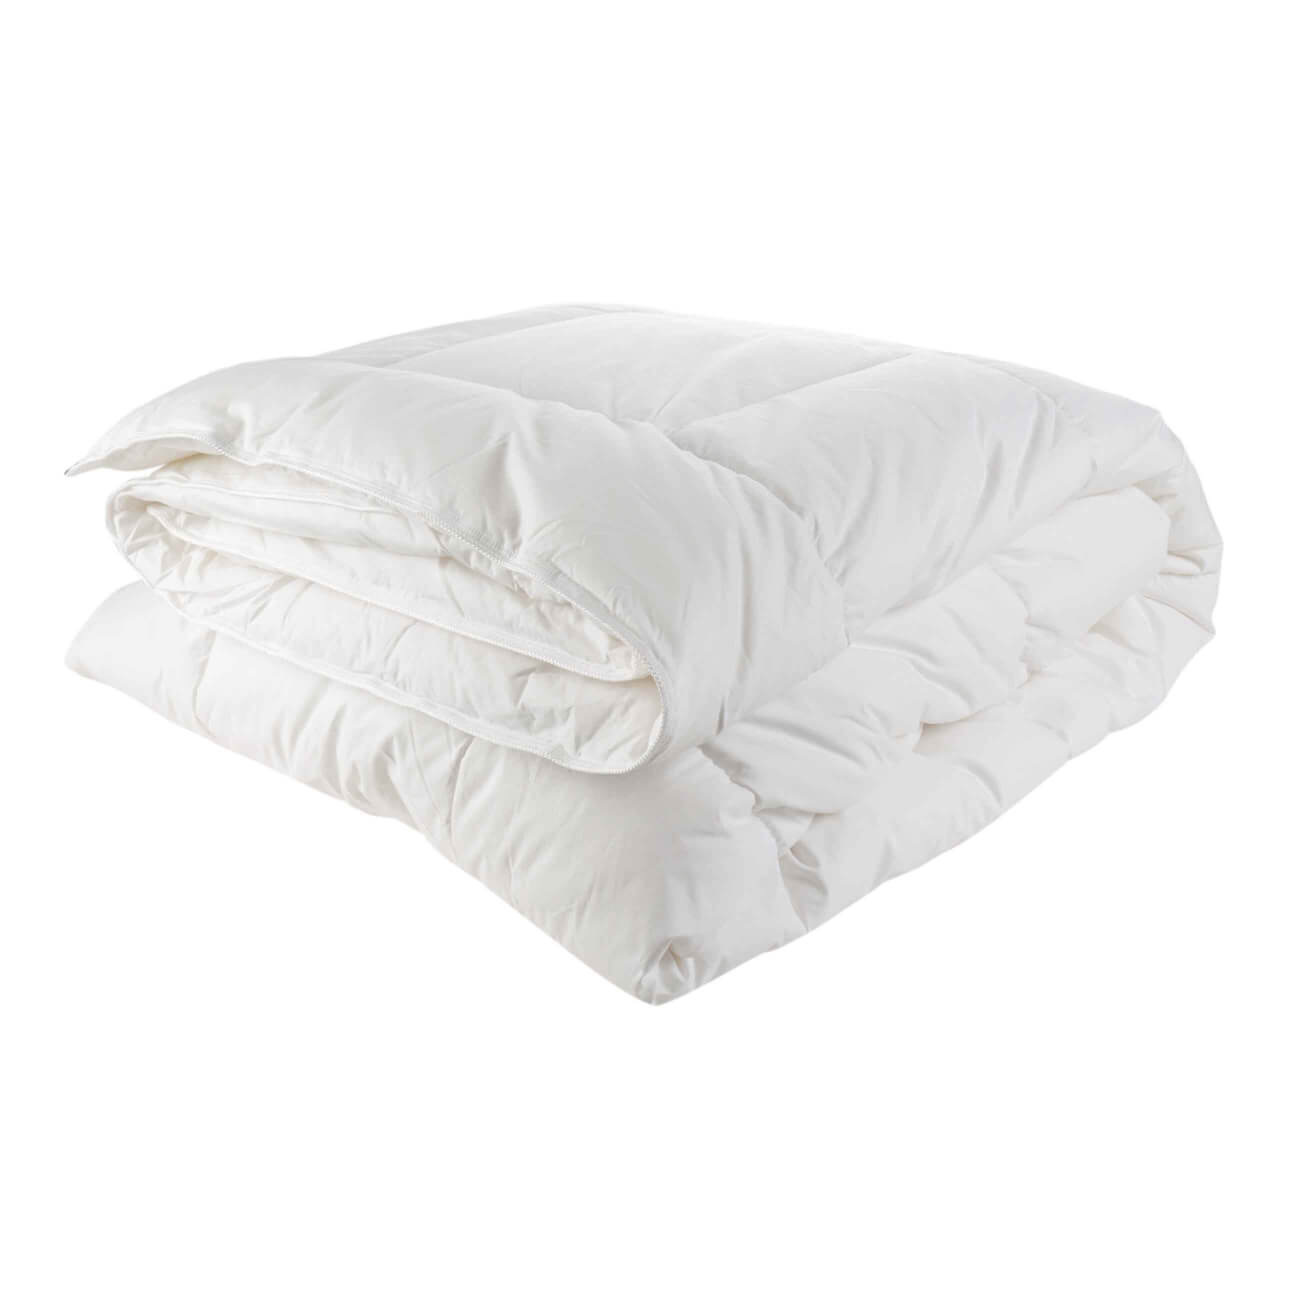 Одеяло, 200х220 см, хлопок/микрофибра, Soft cotton одеяло 200х220 см микрофибра simply soft